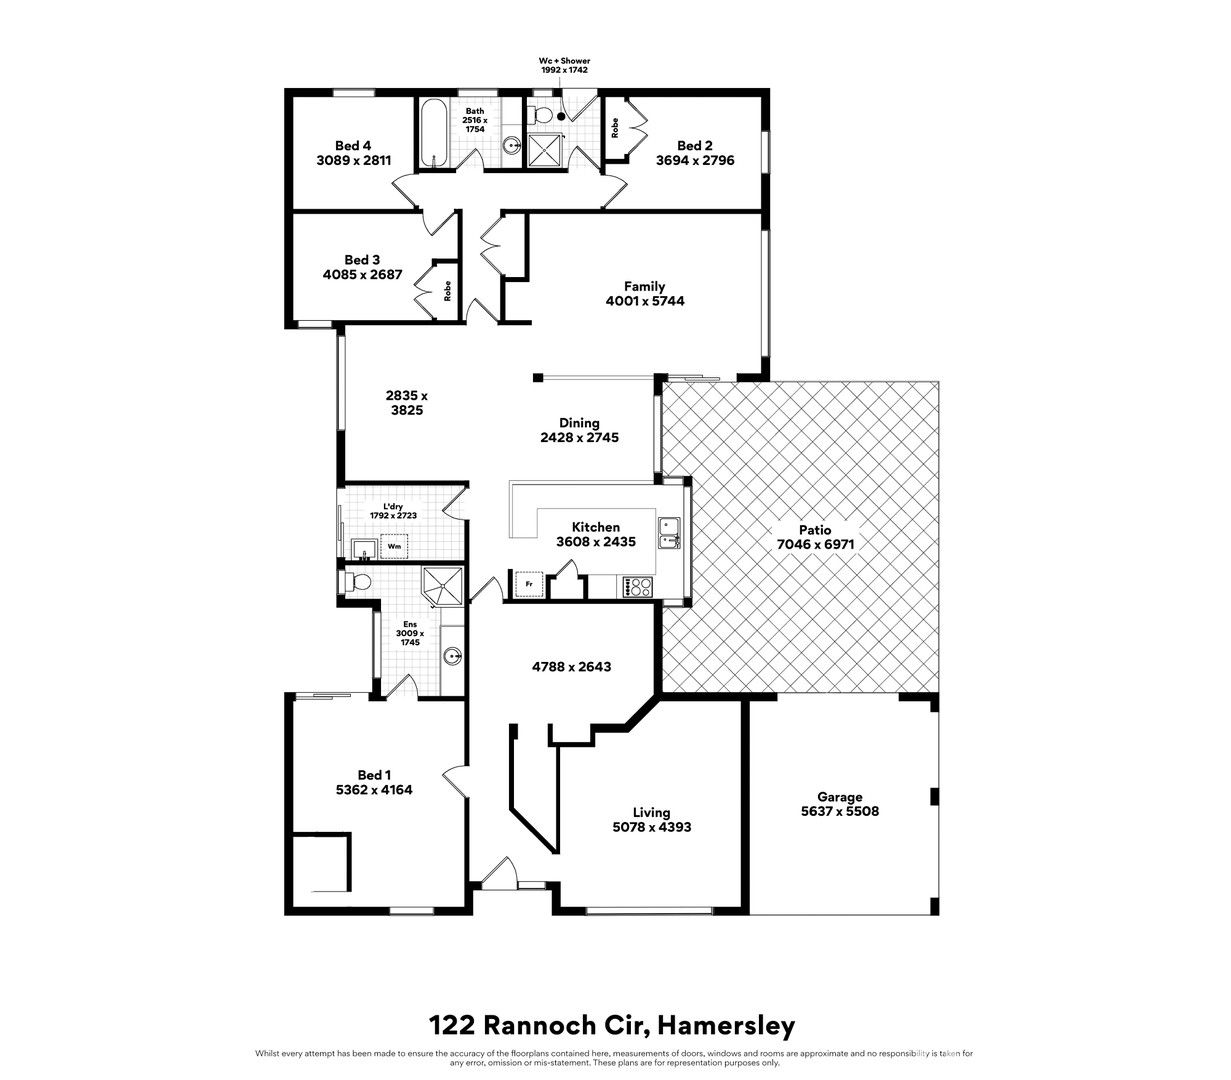 4 bedrooms House in 122 Rannoch Circle HAMERSLEY WA, 6022